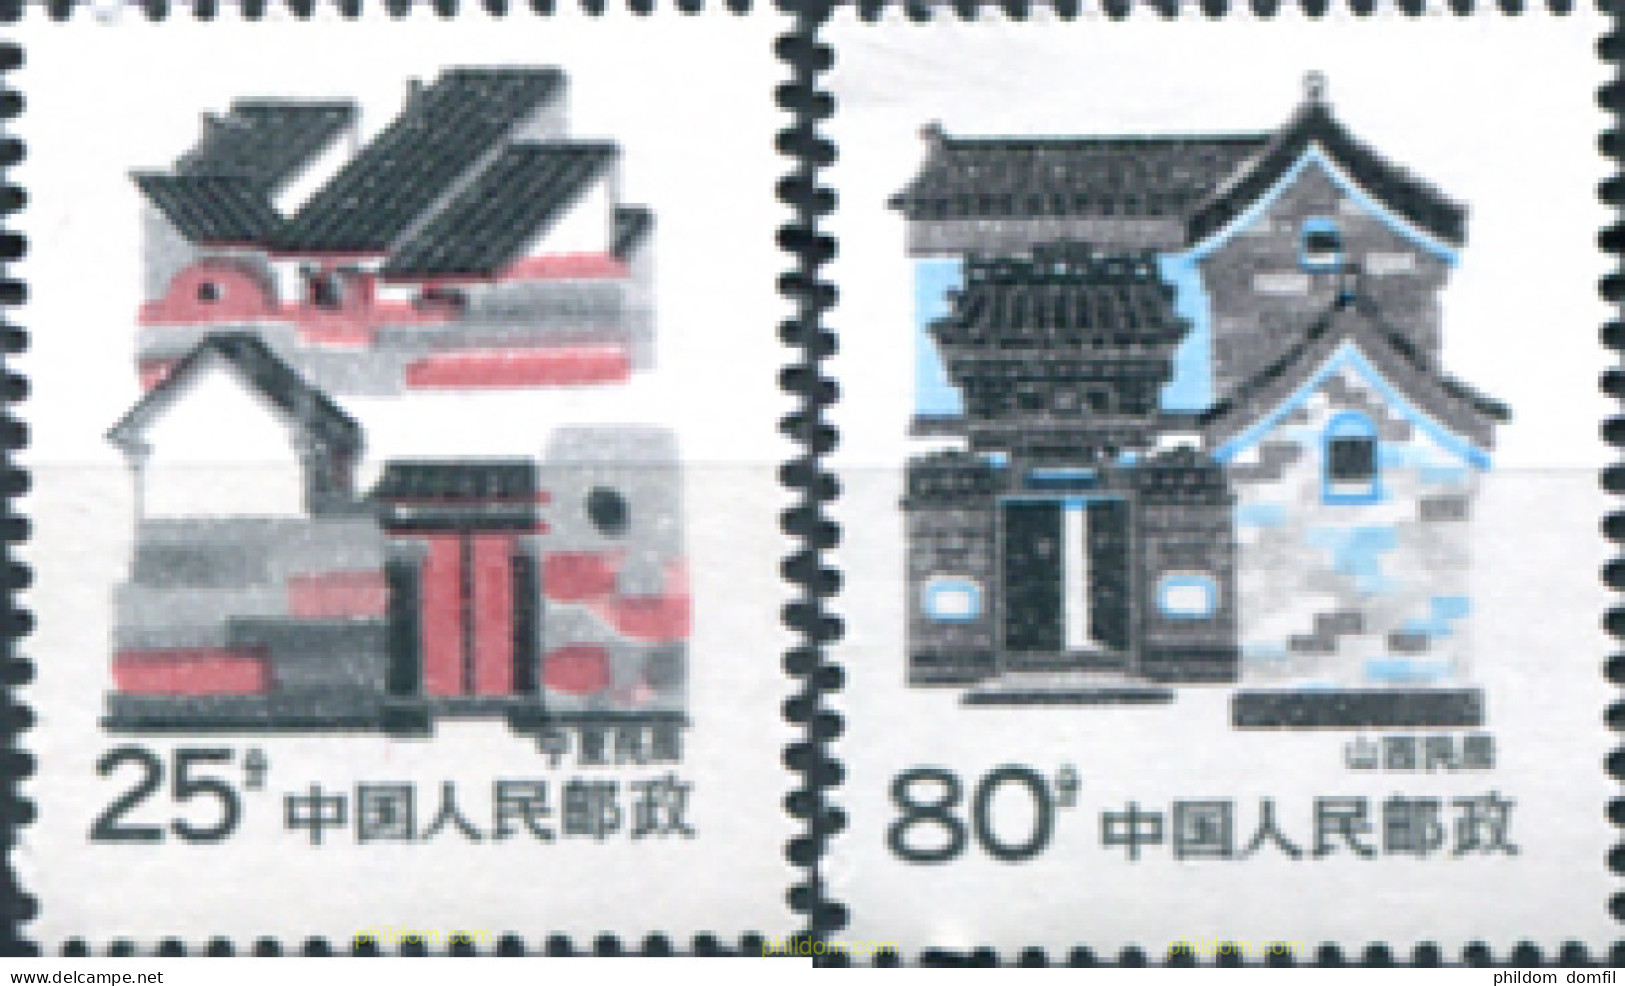 304878 MNH CHINA. República Popular 1990 CASAS ANTIGUAS - Unused Stamps